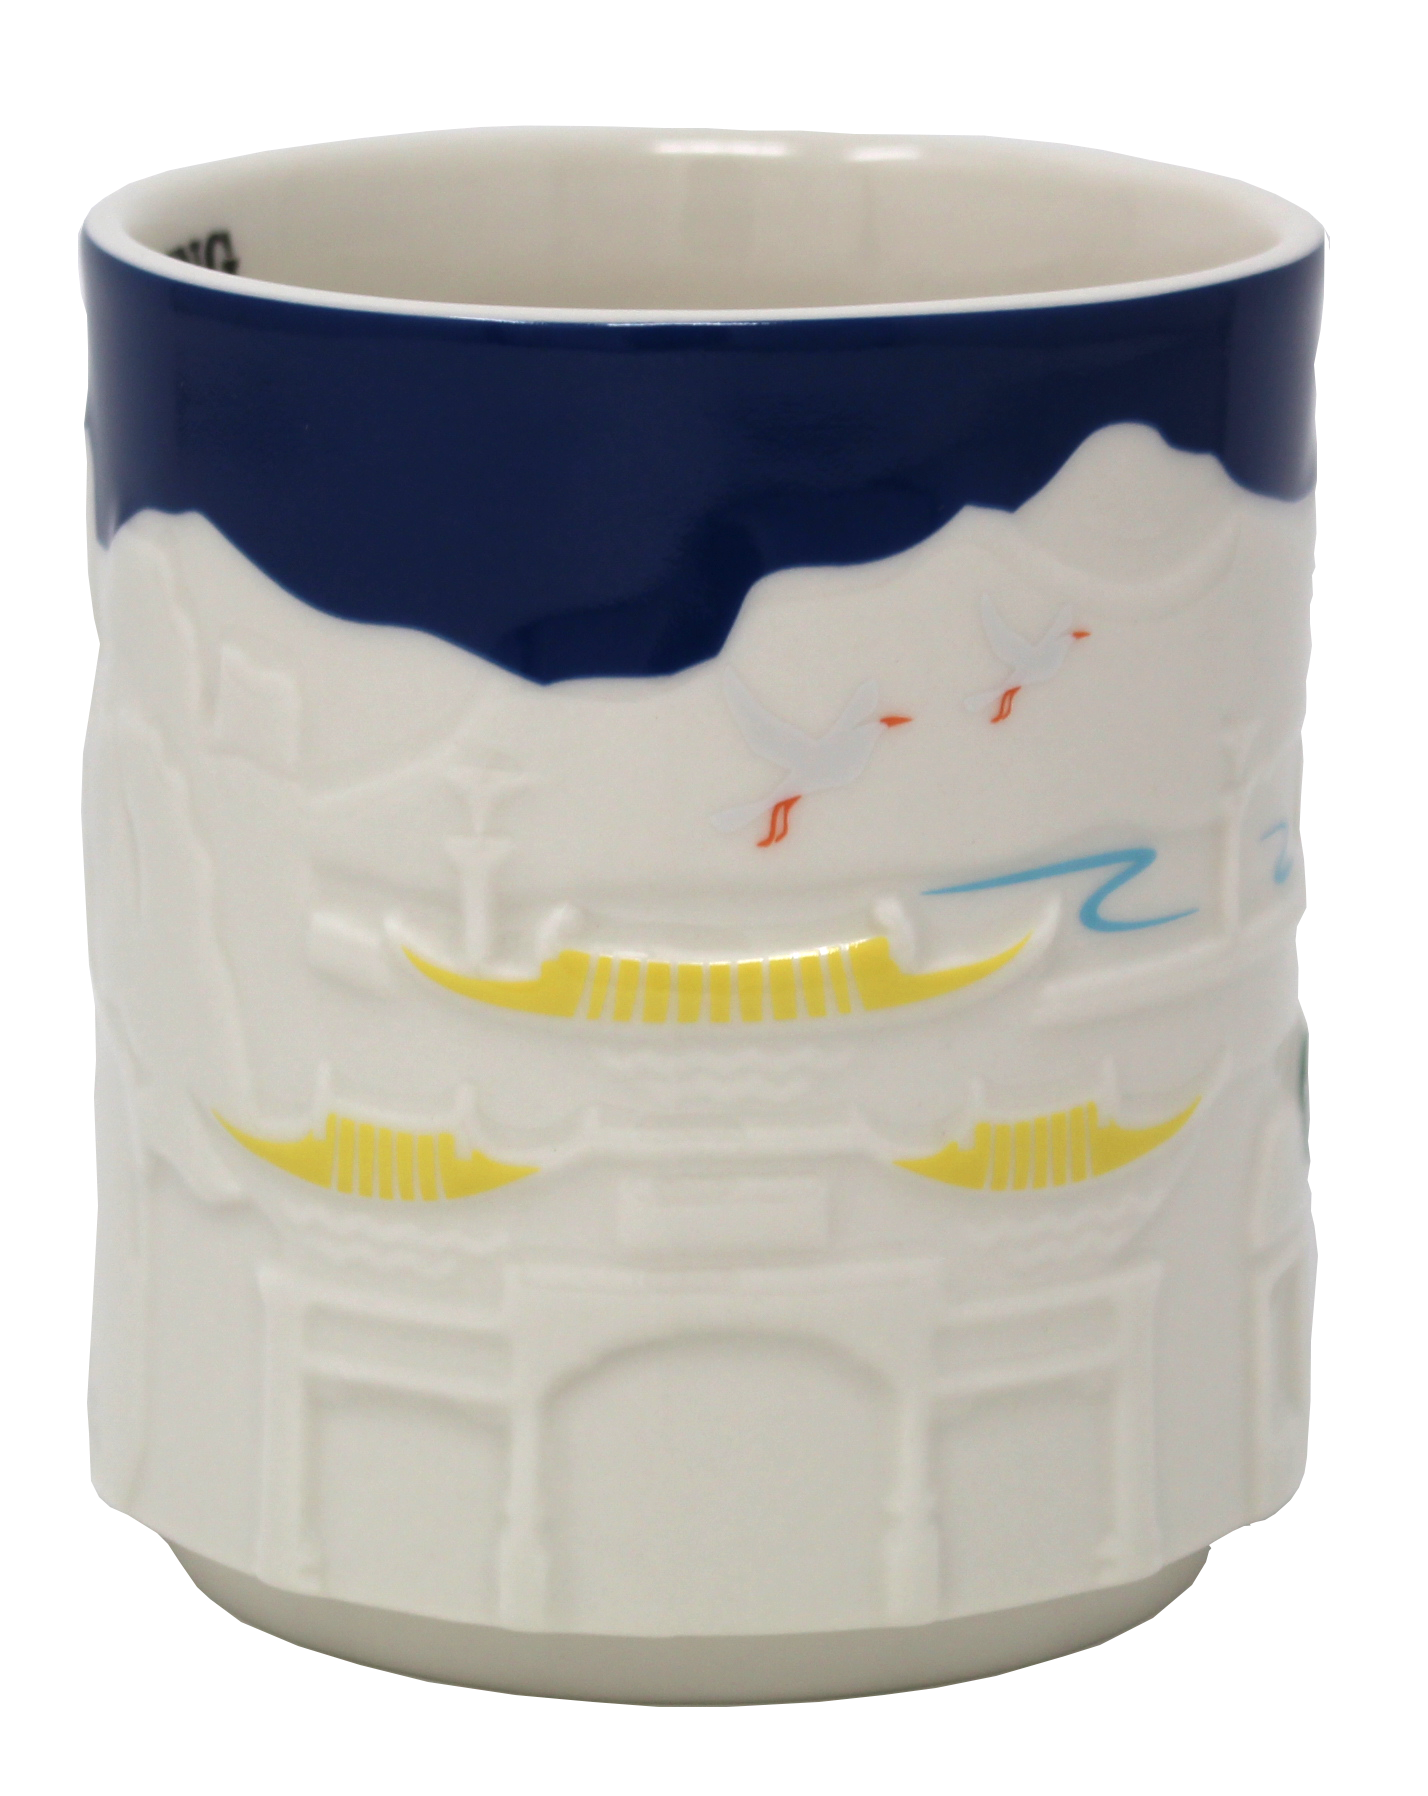 Starbucks Collector Relief Series Kunming Ceramic Mug, 16 Oz